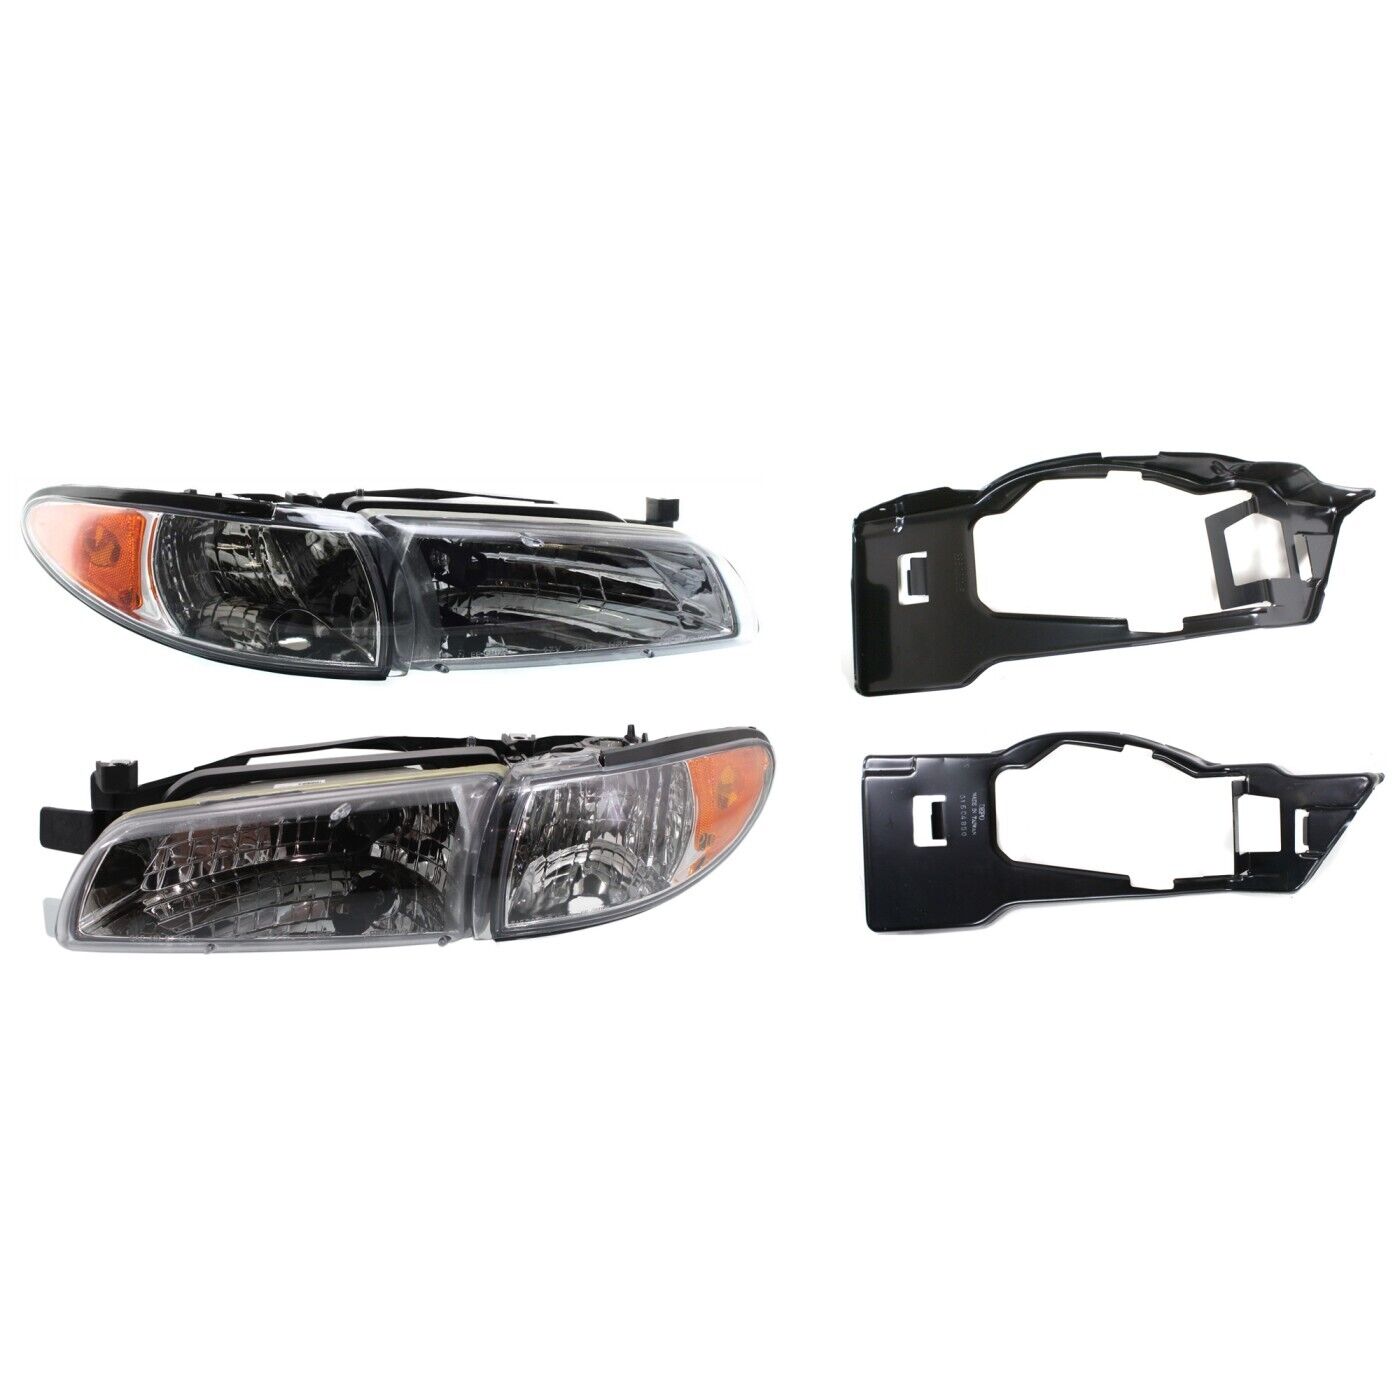 Headlight Kit For 97-03 Pontiac Grand Prix Headlight Bracket Left and Right Side